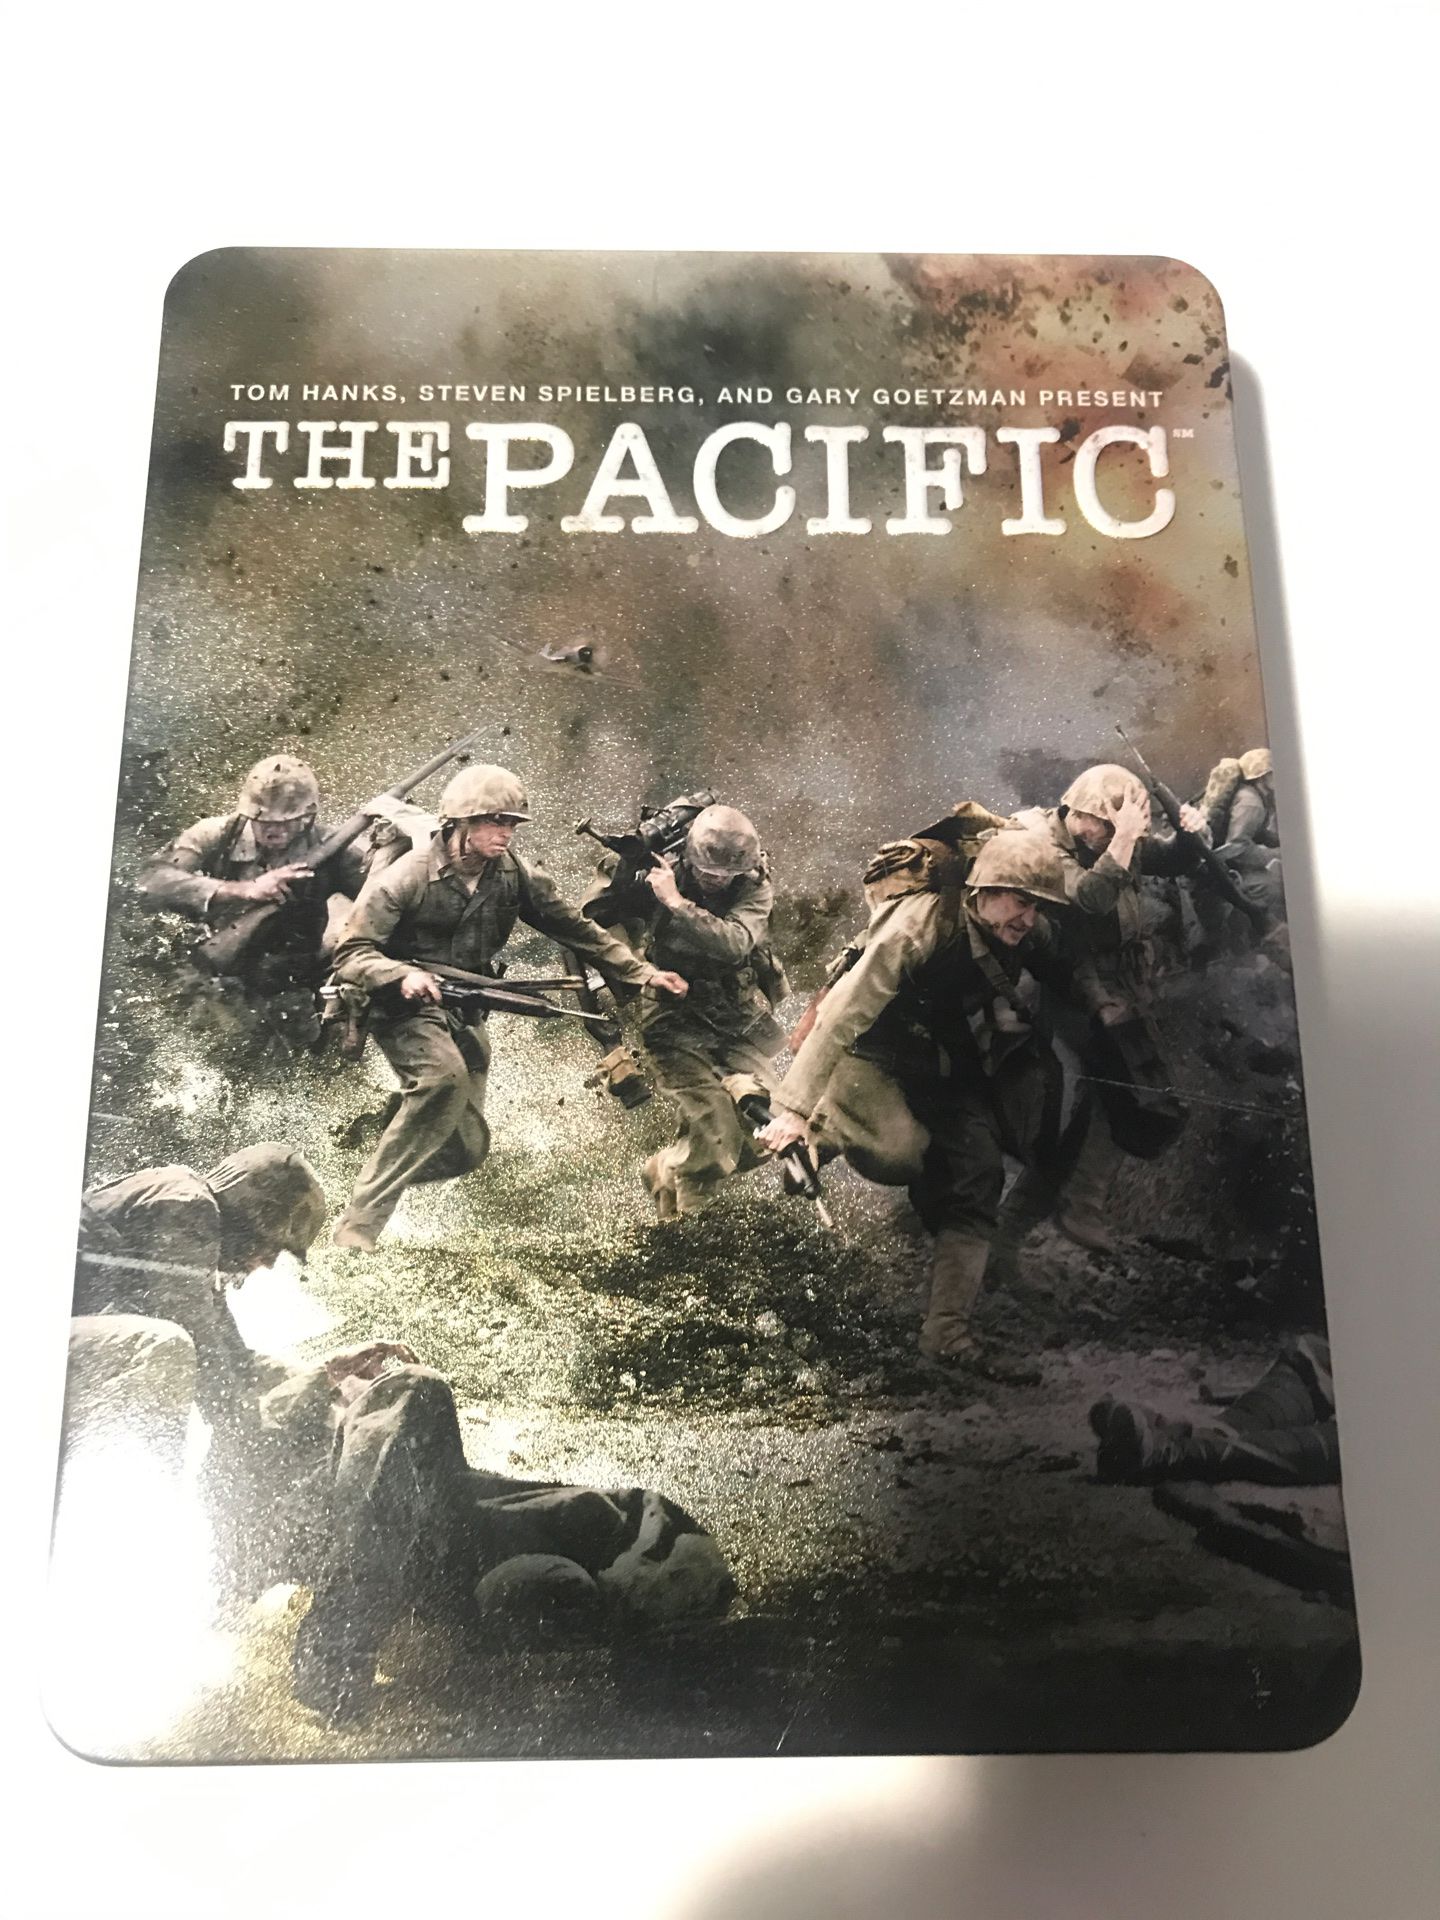 The Pacific DVD tin set